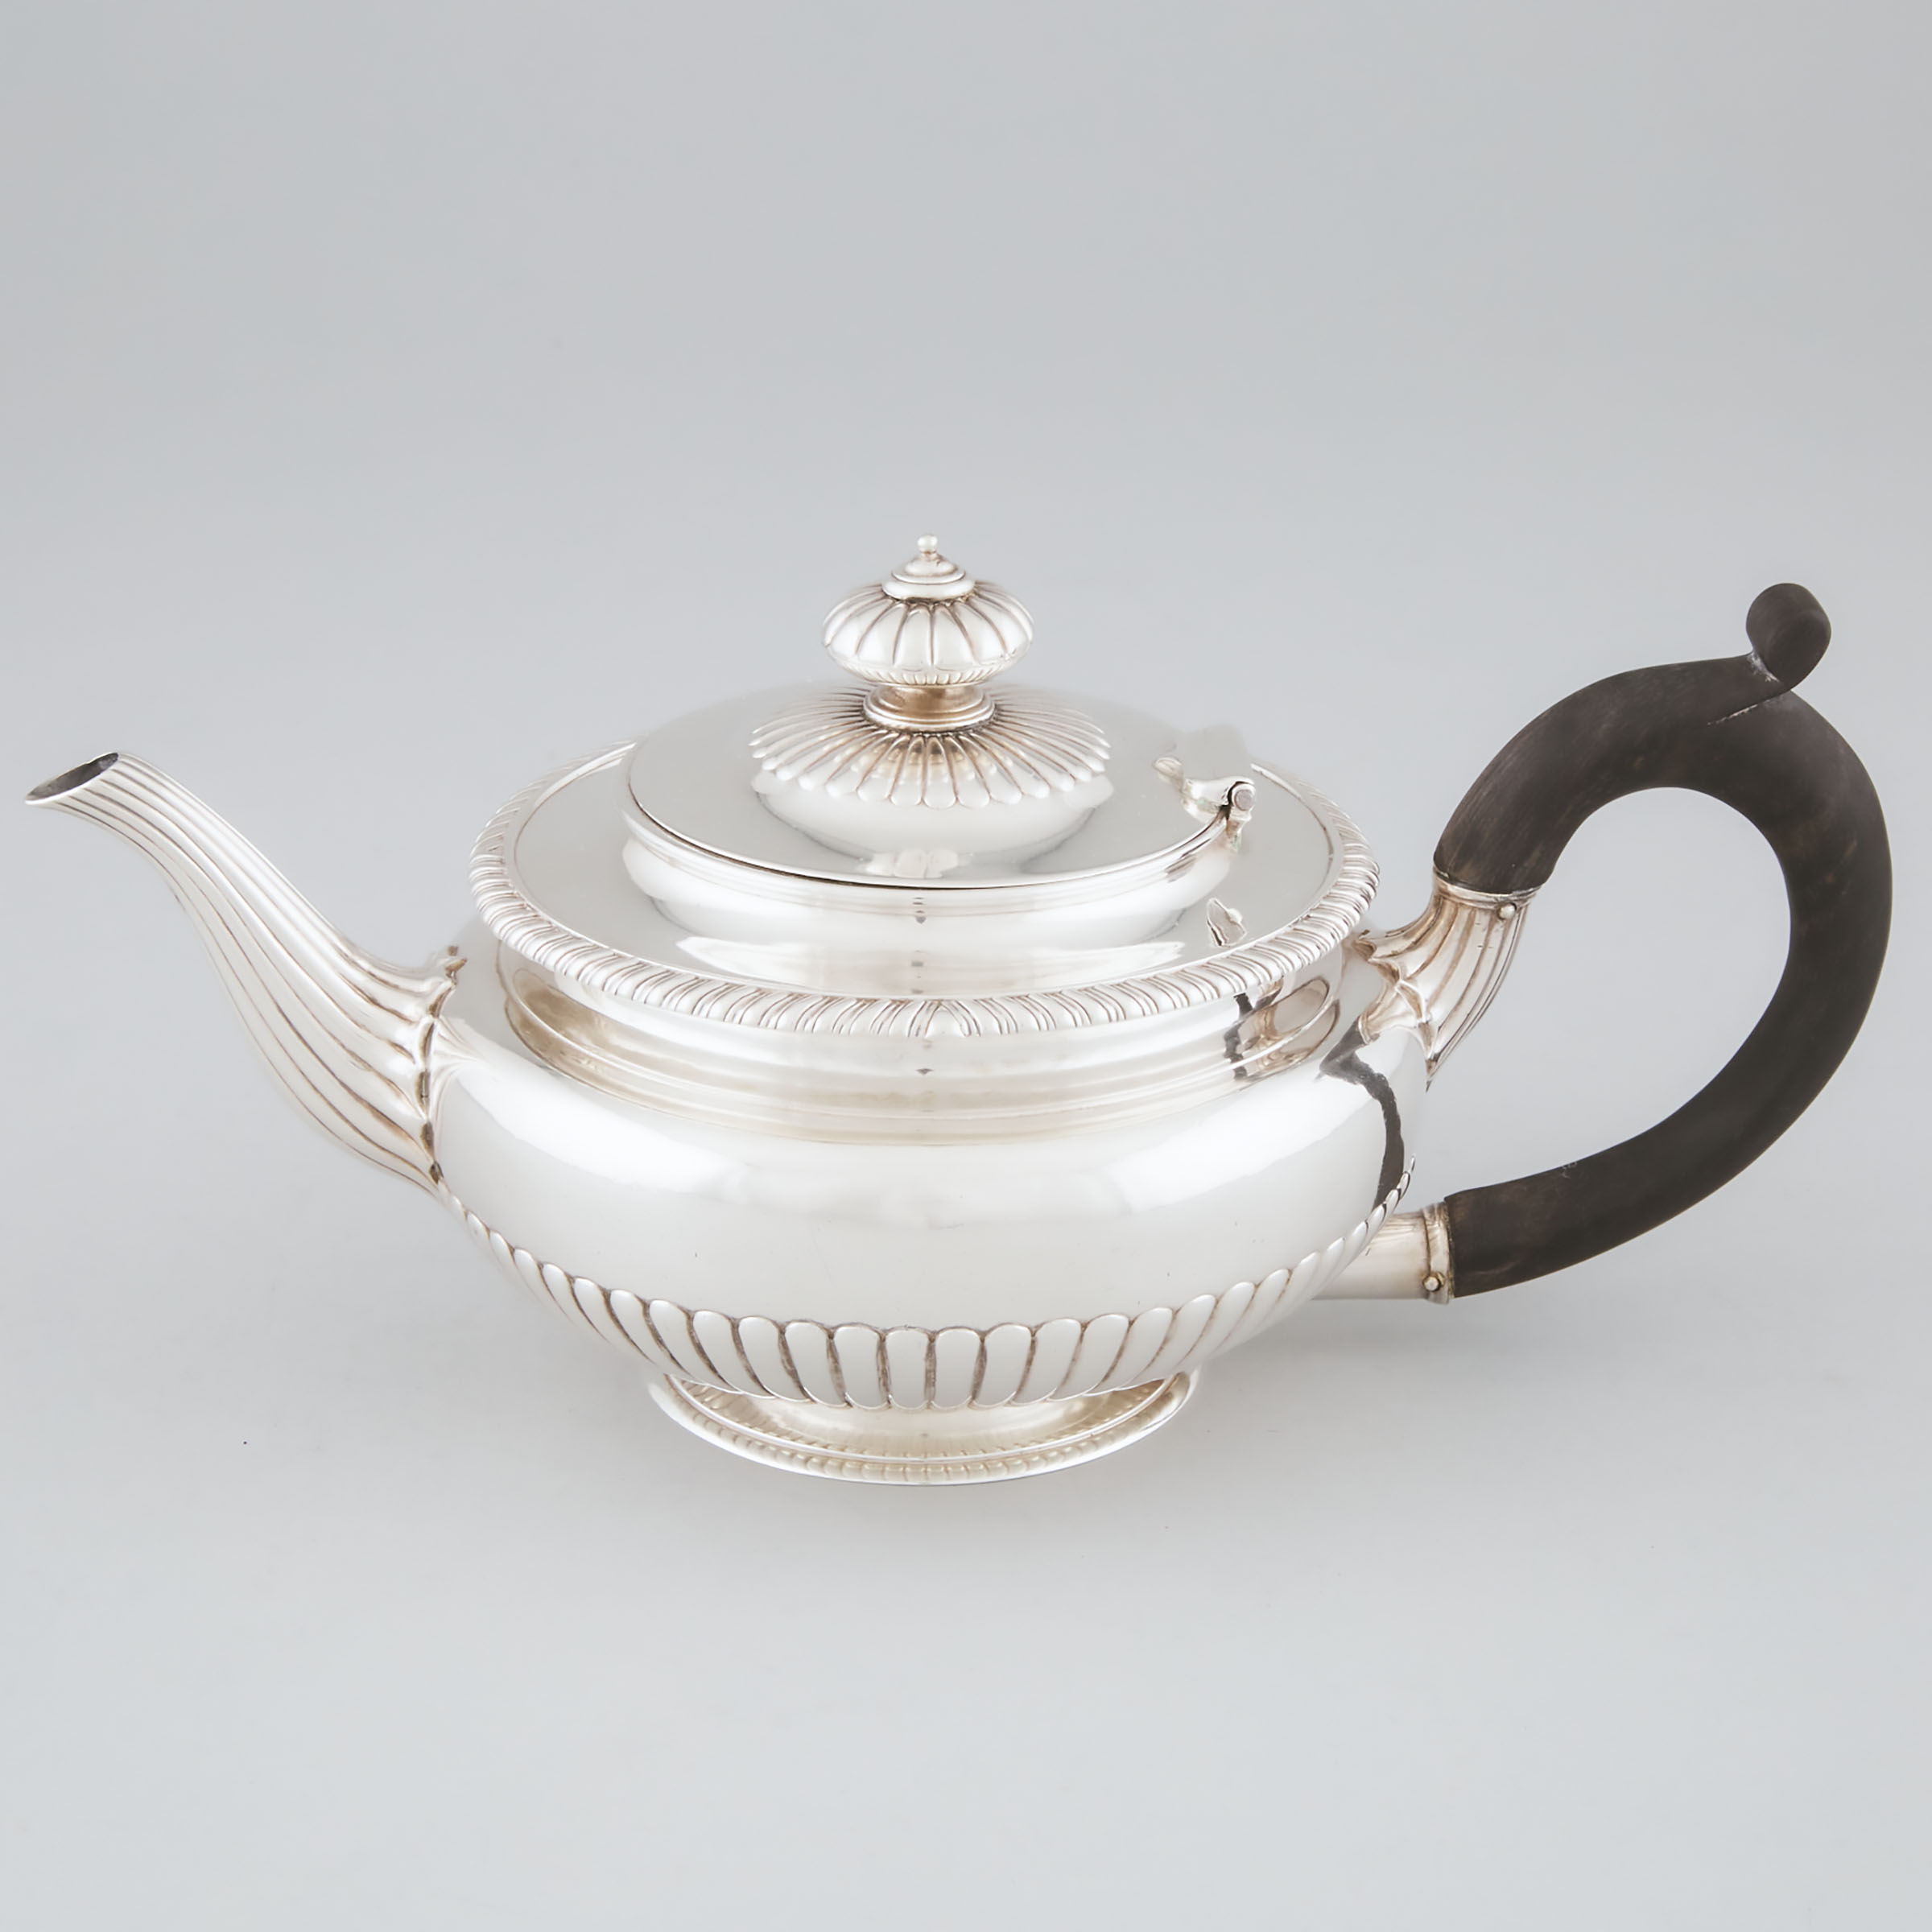 George IV Silver Teapot, Paul Storr, London, 1821